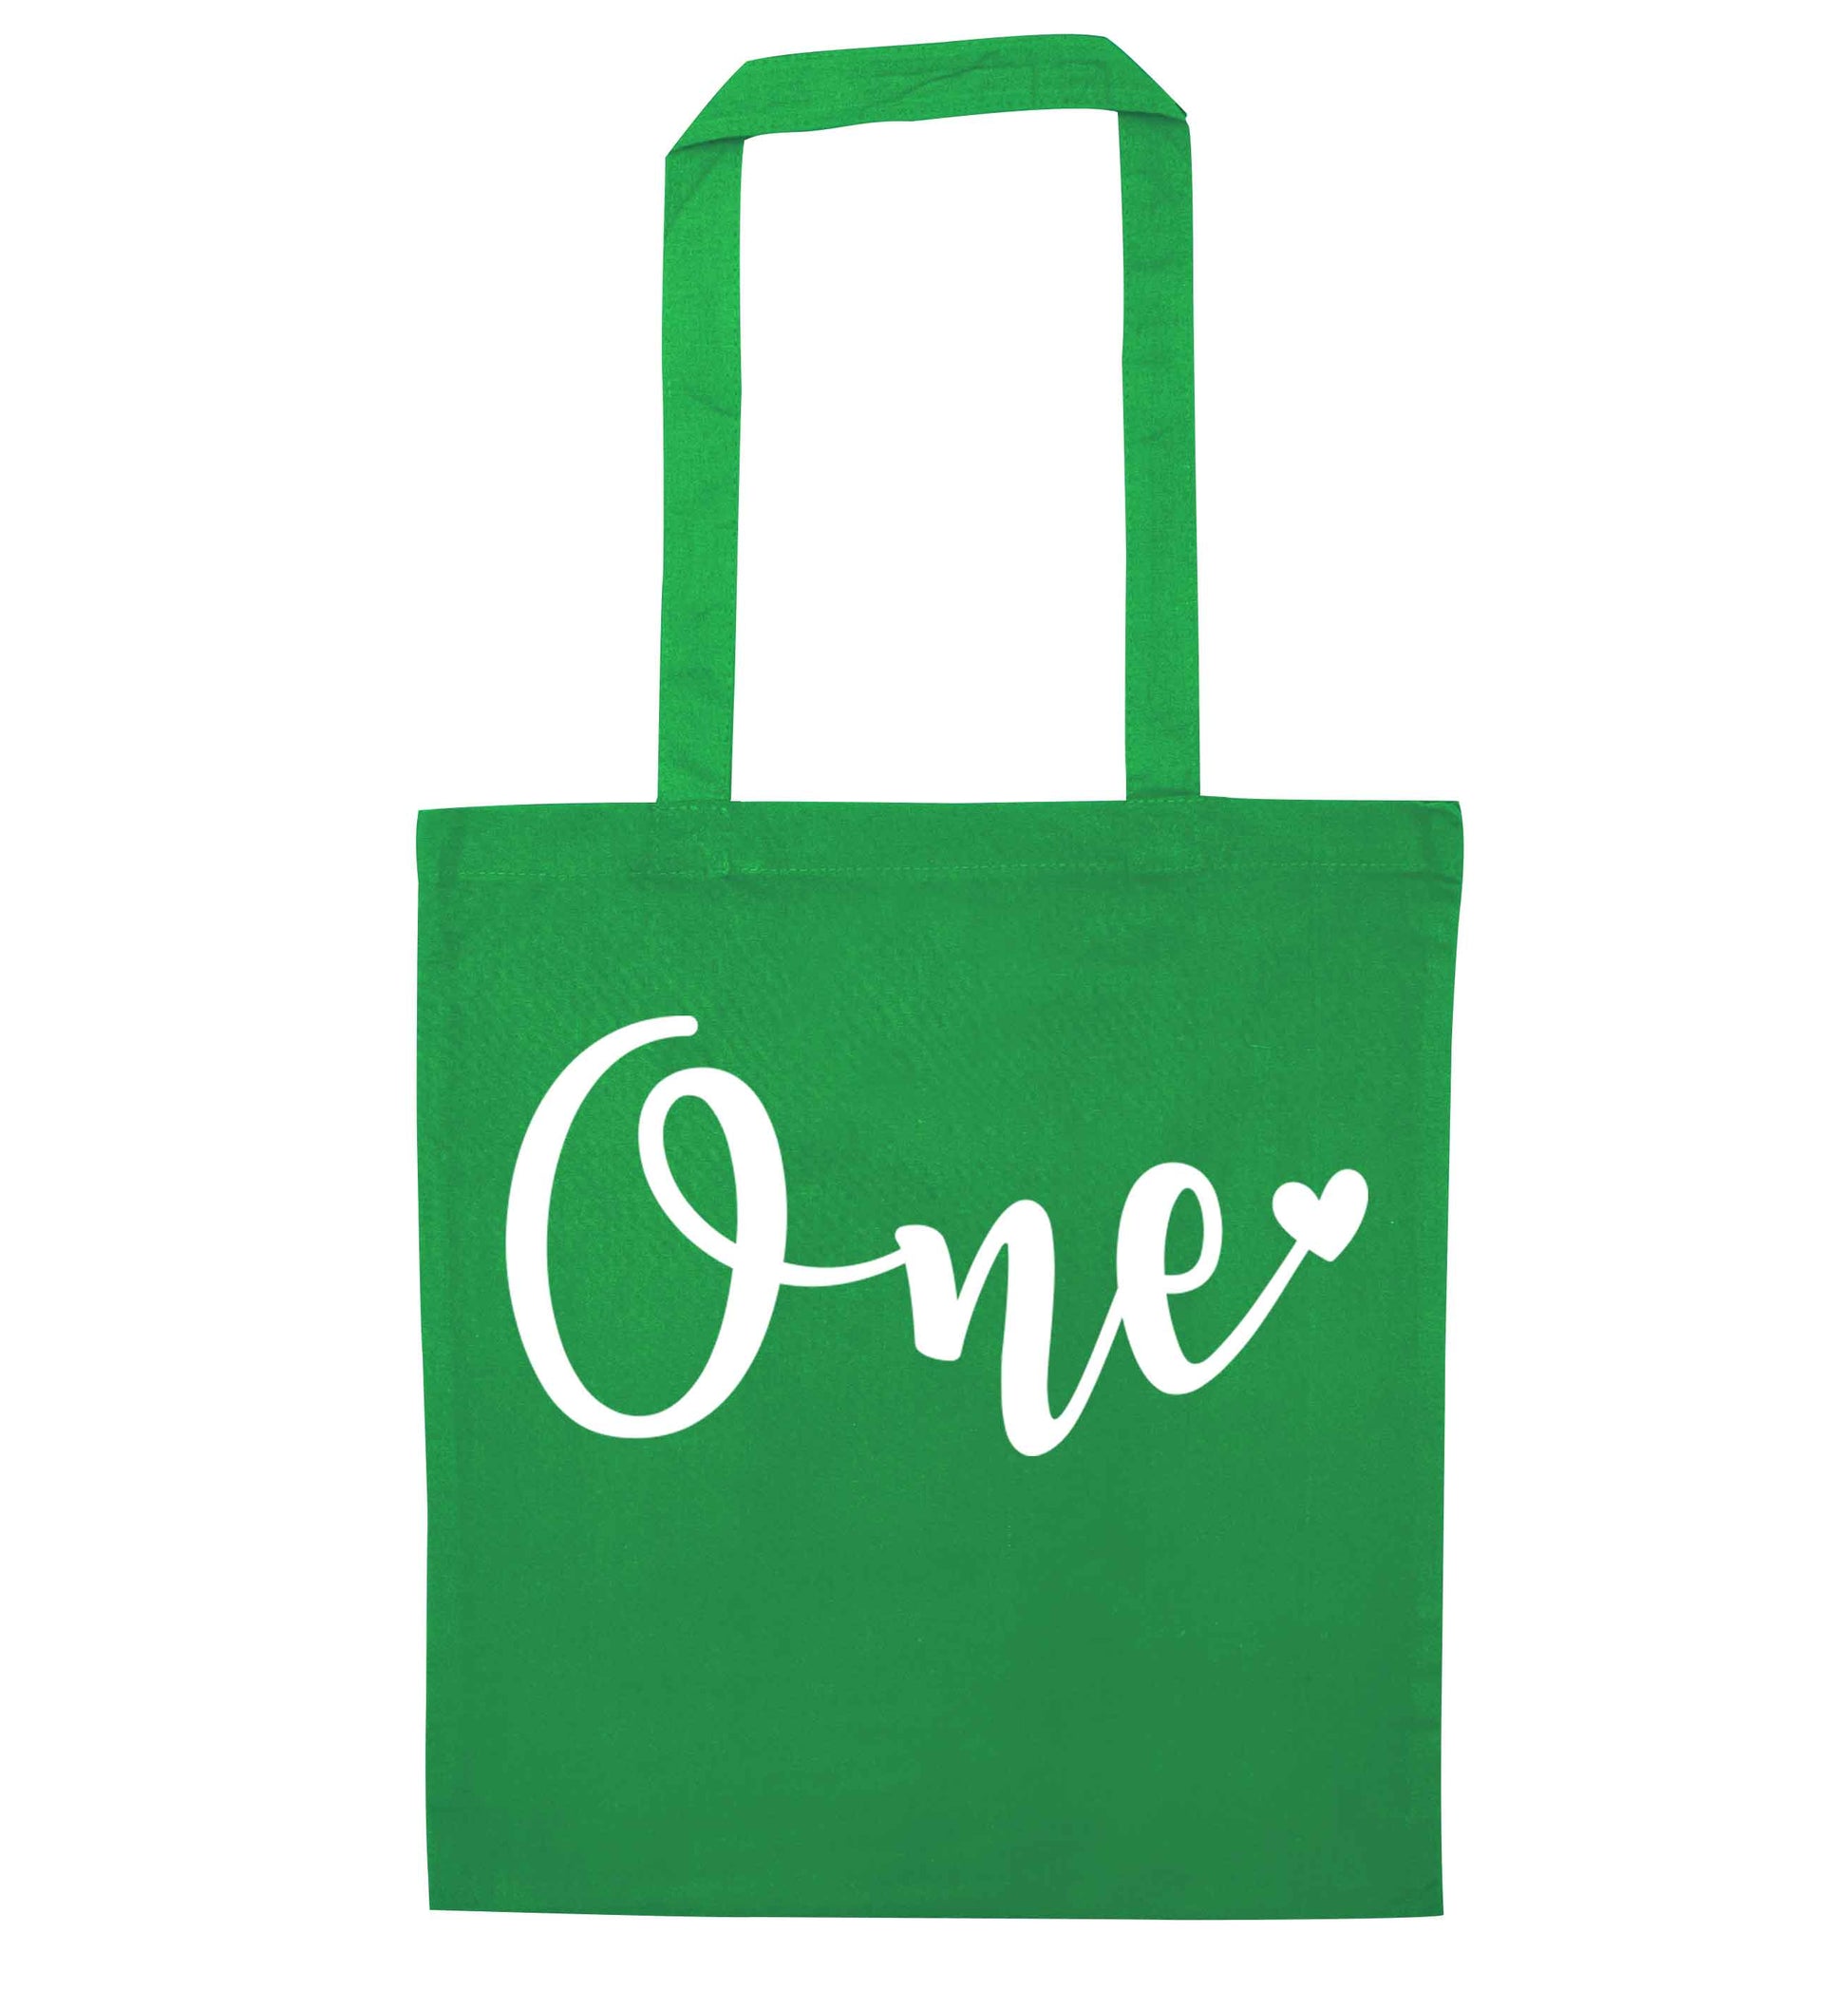 One green tote bag